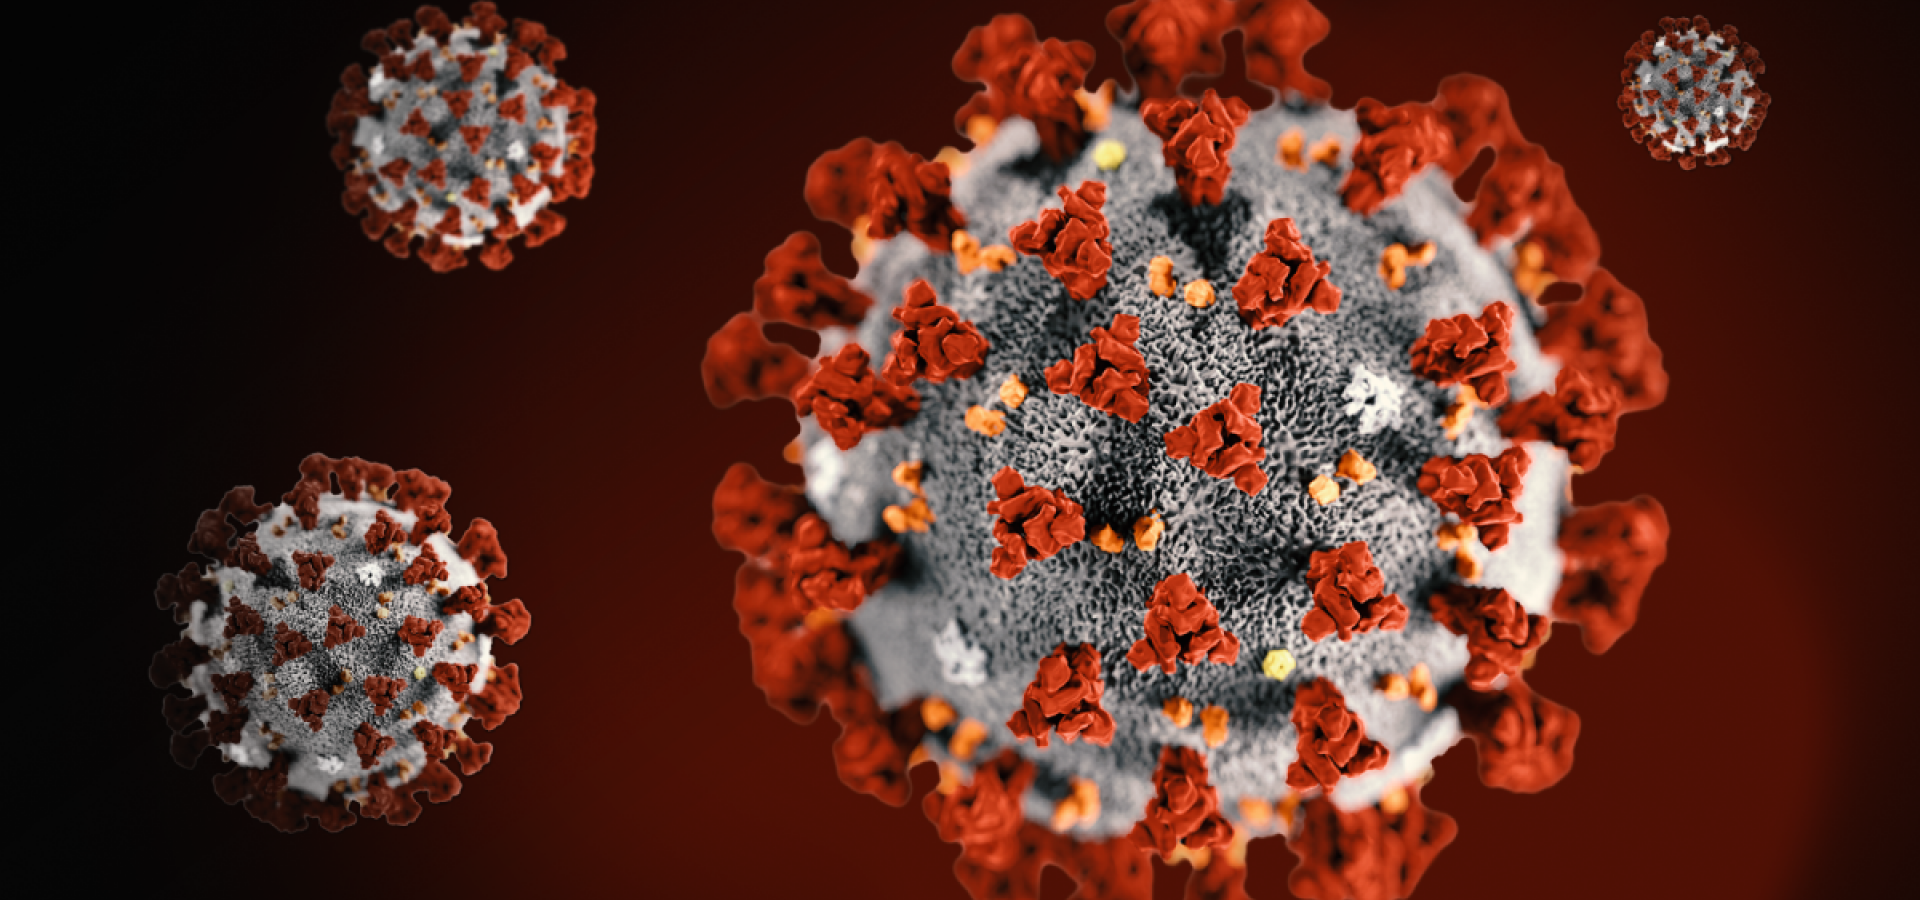 3D rendering of the coronavirus linking to information on the coronavirus